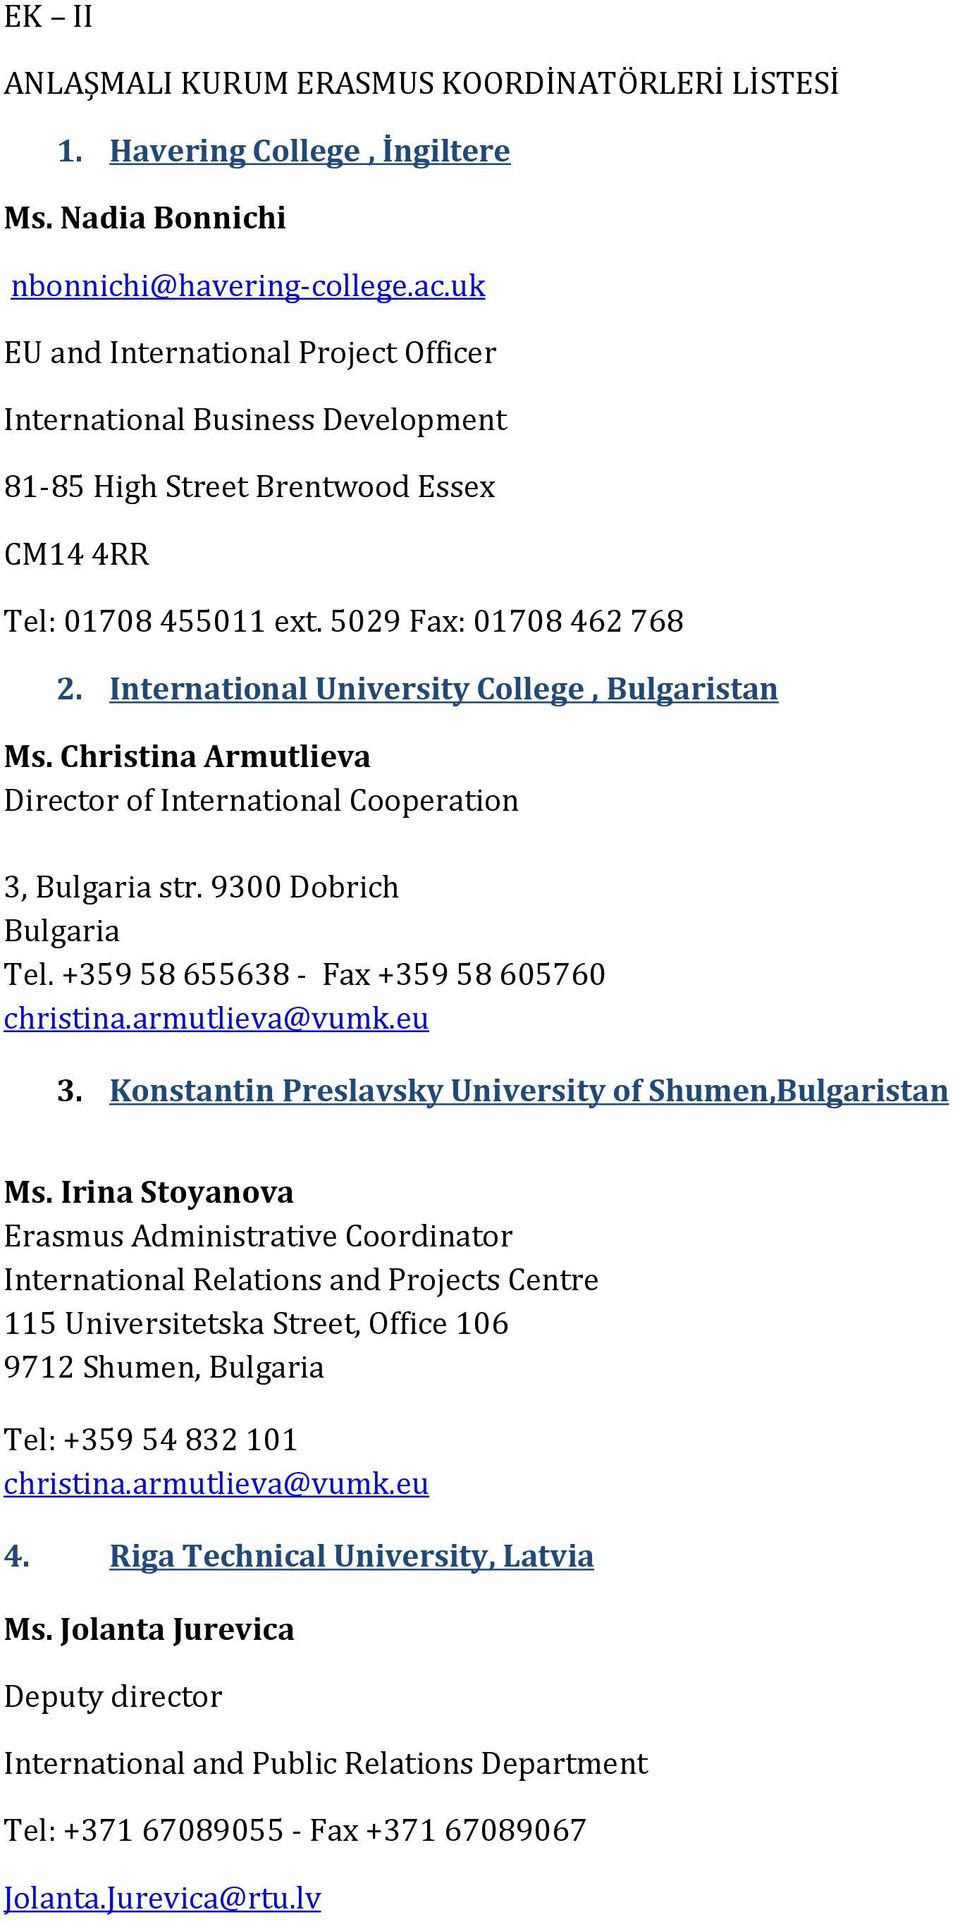 International University College, Bulgaristan Ms. Christina Armutlieva Director of International Cooperation 3, Bulgaria str. 9300 Dobrich Bulgaria Tel. +359 58 655638 - Fax +359 58 605760 christina.